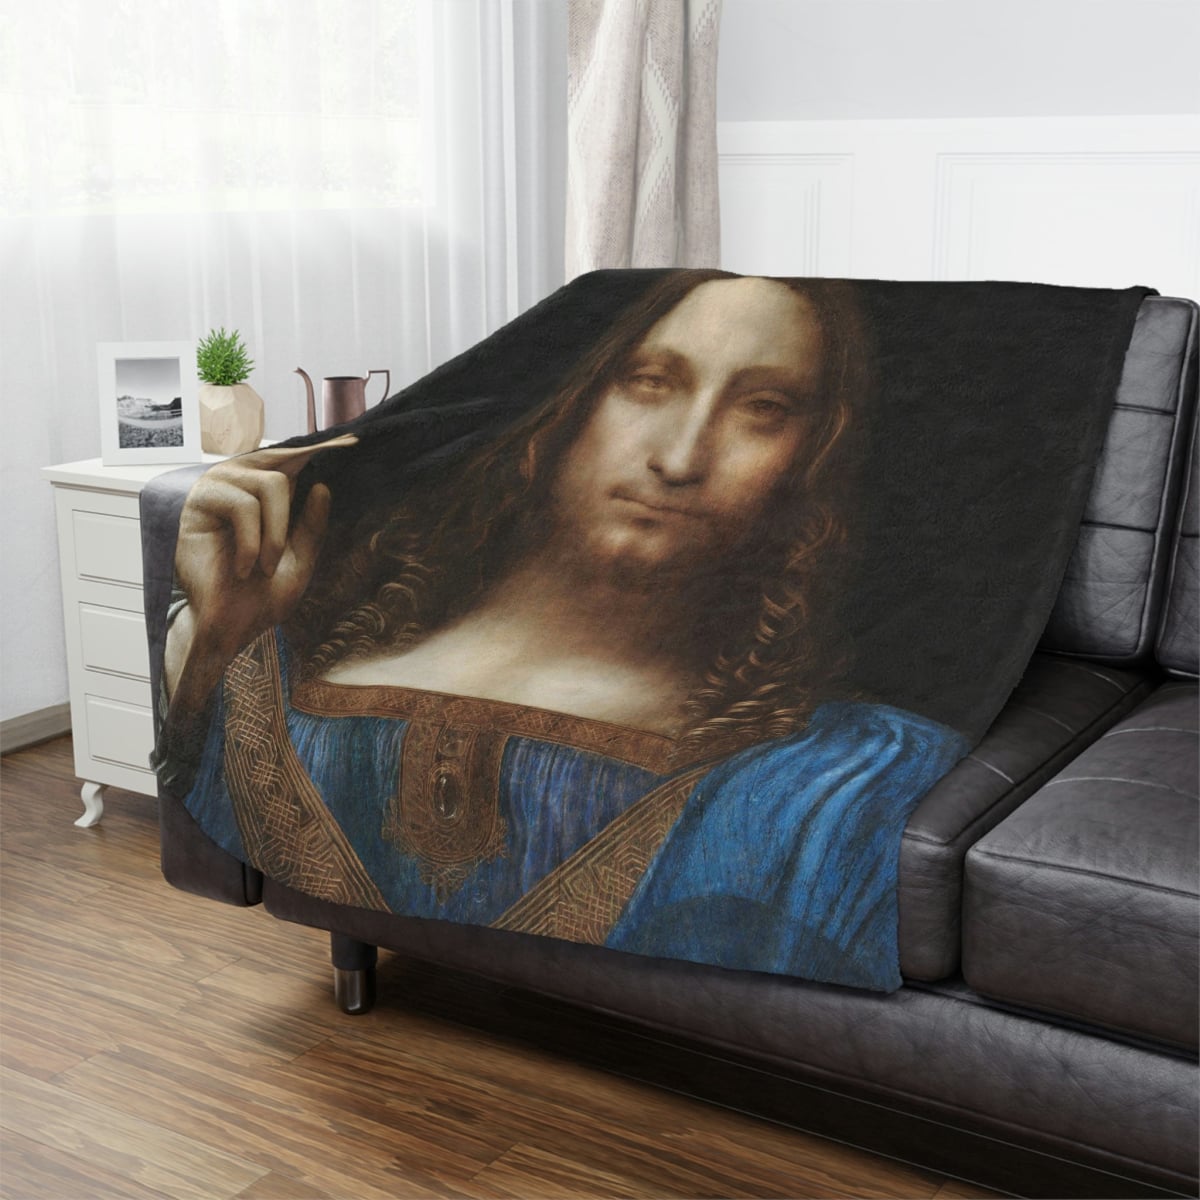 Unique Art Decor Blanket for Your Home